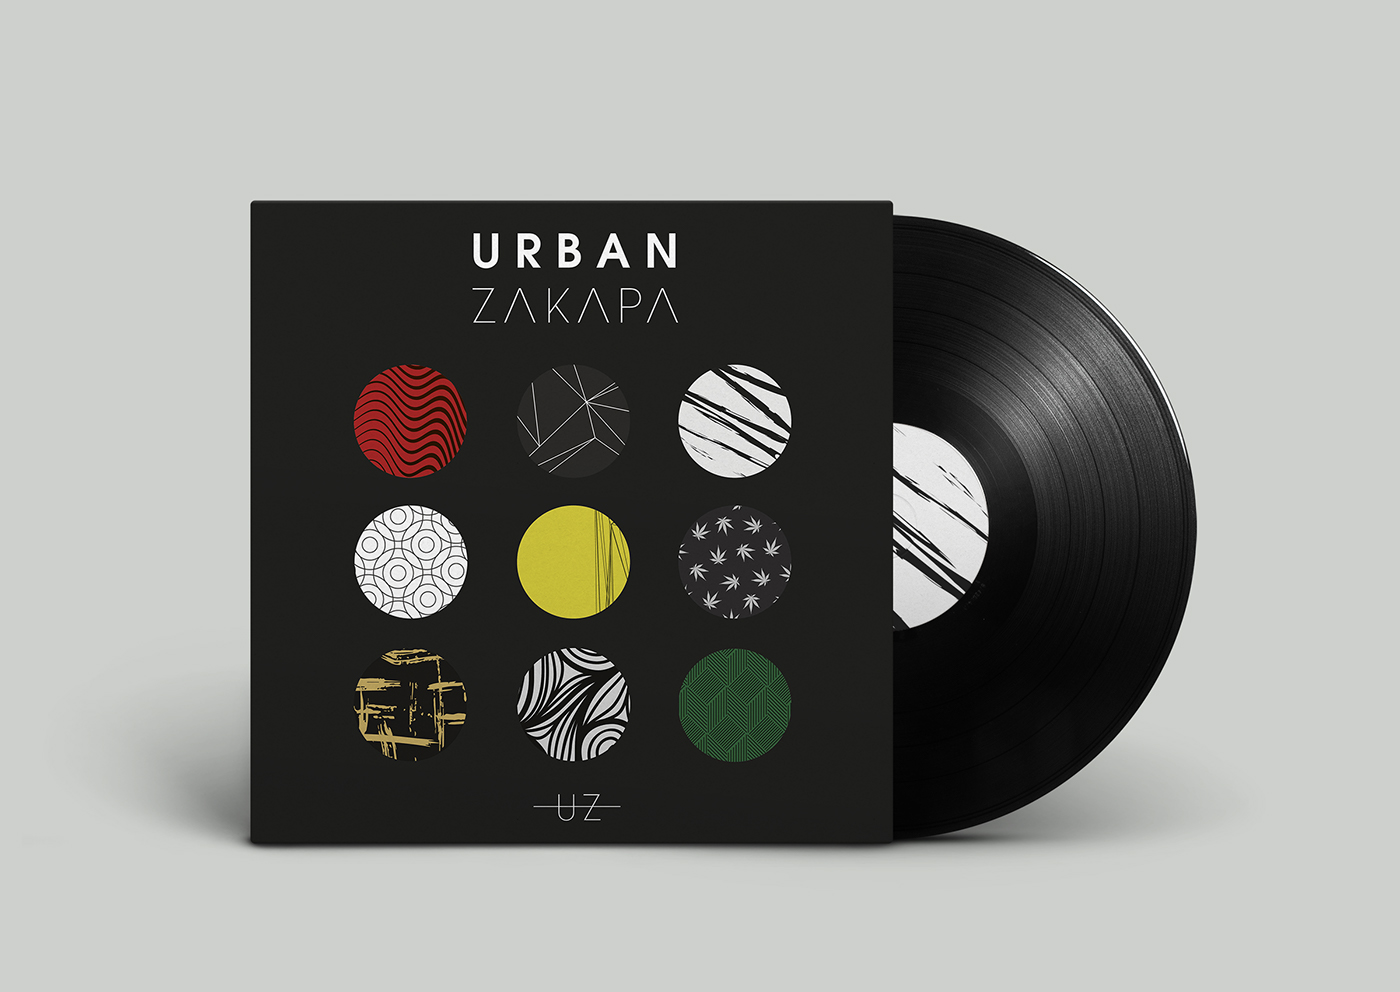 vinyl cover design music Urban zakapa